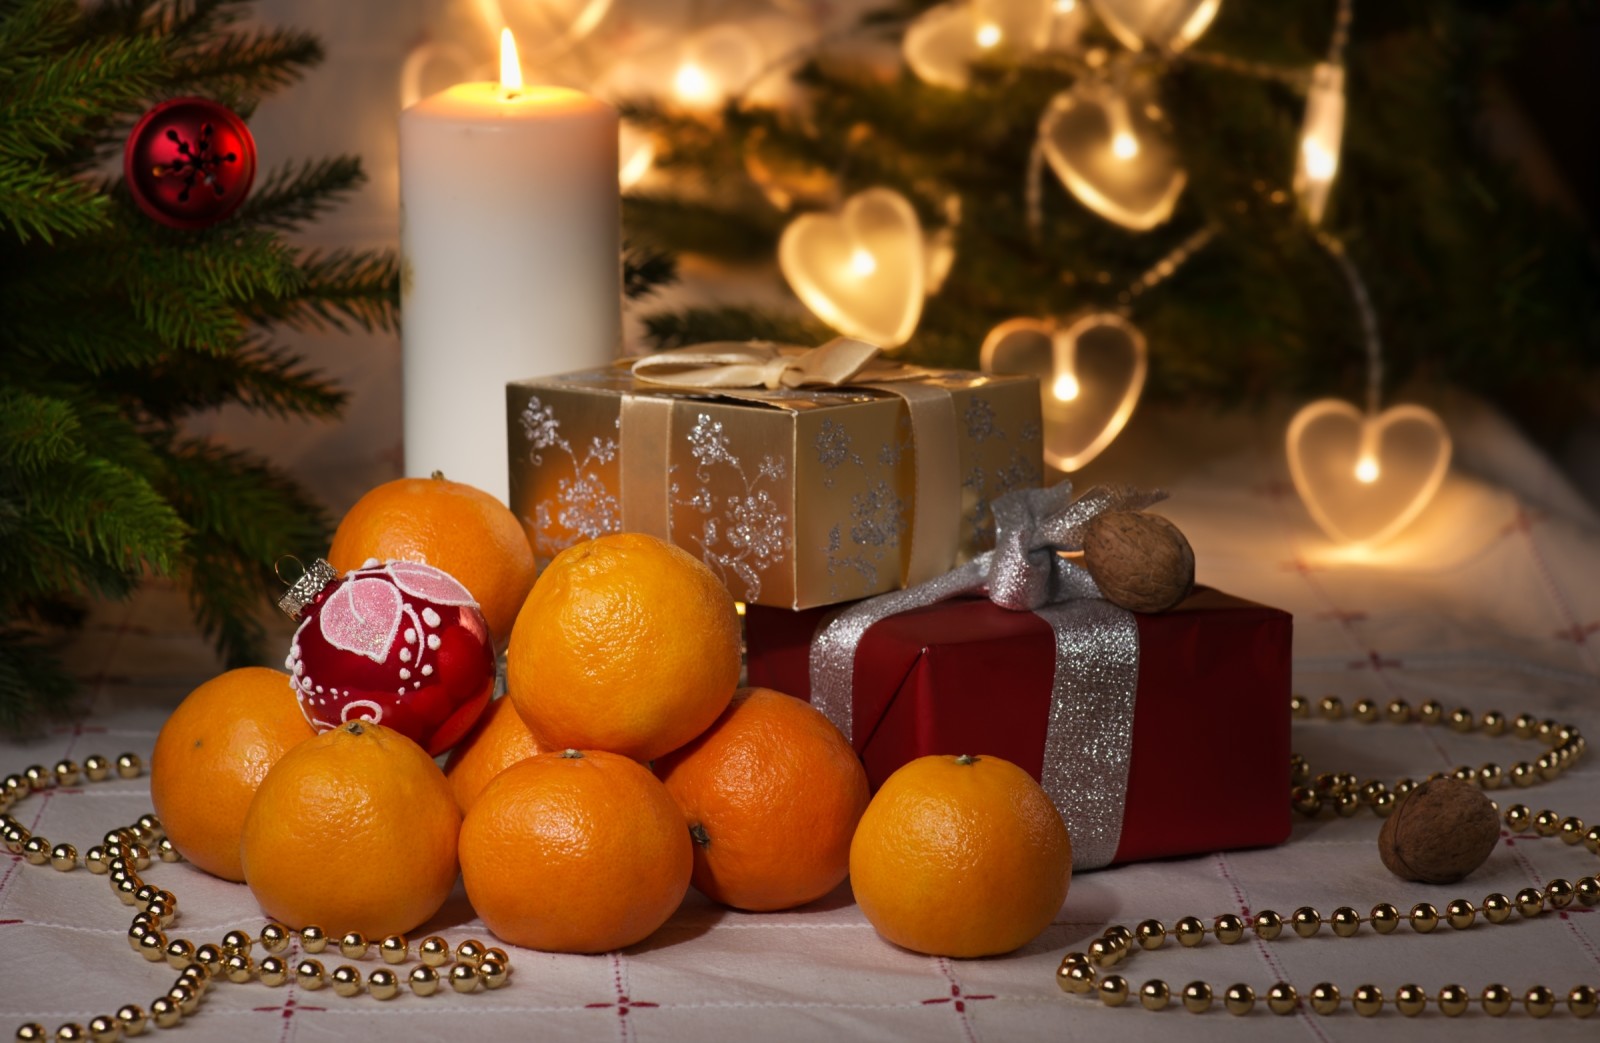 liburan, hadiah, kotak, mainan, merapikan, lilin, jeruk keprok